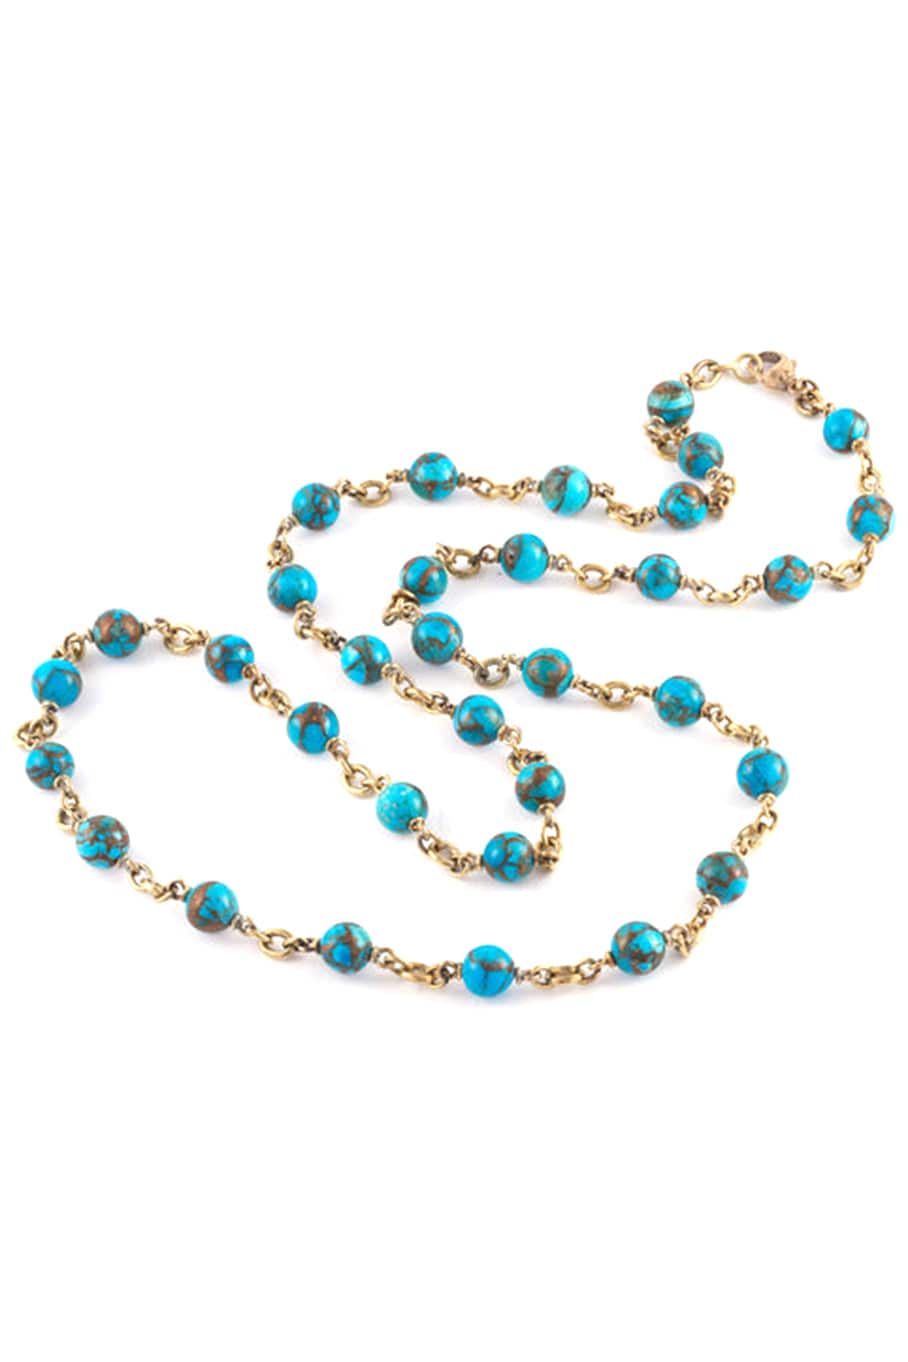 SYLVA & CIE-Kingman Turquoise Bead Necklace-YELLOW GOLD